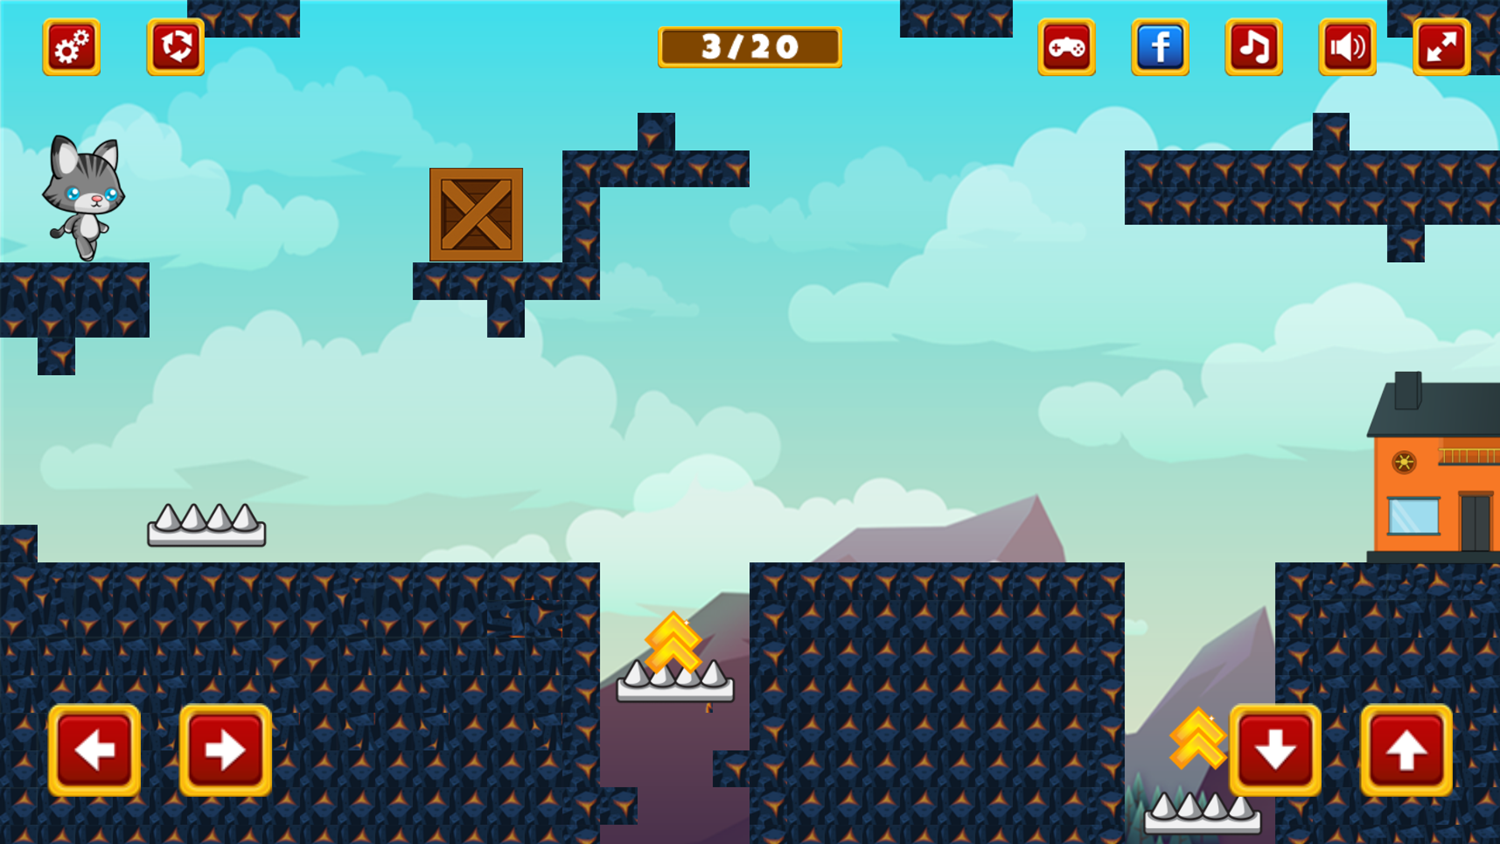 Lost Kitty Go Home Game Level Progress Screenshot.